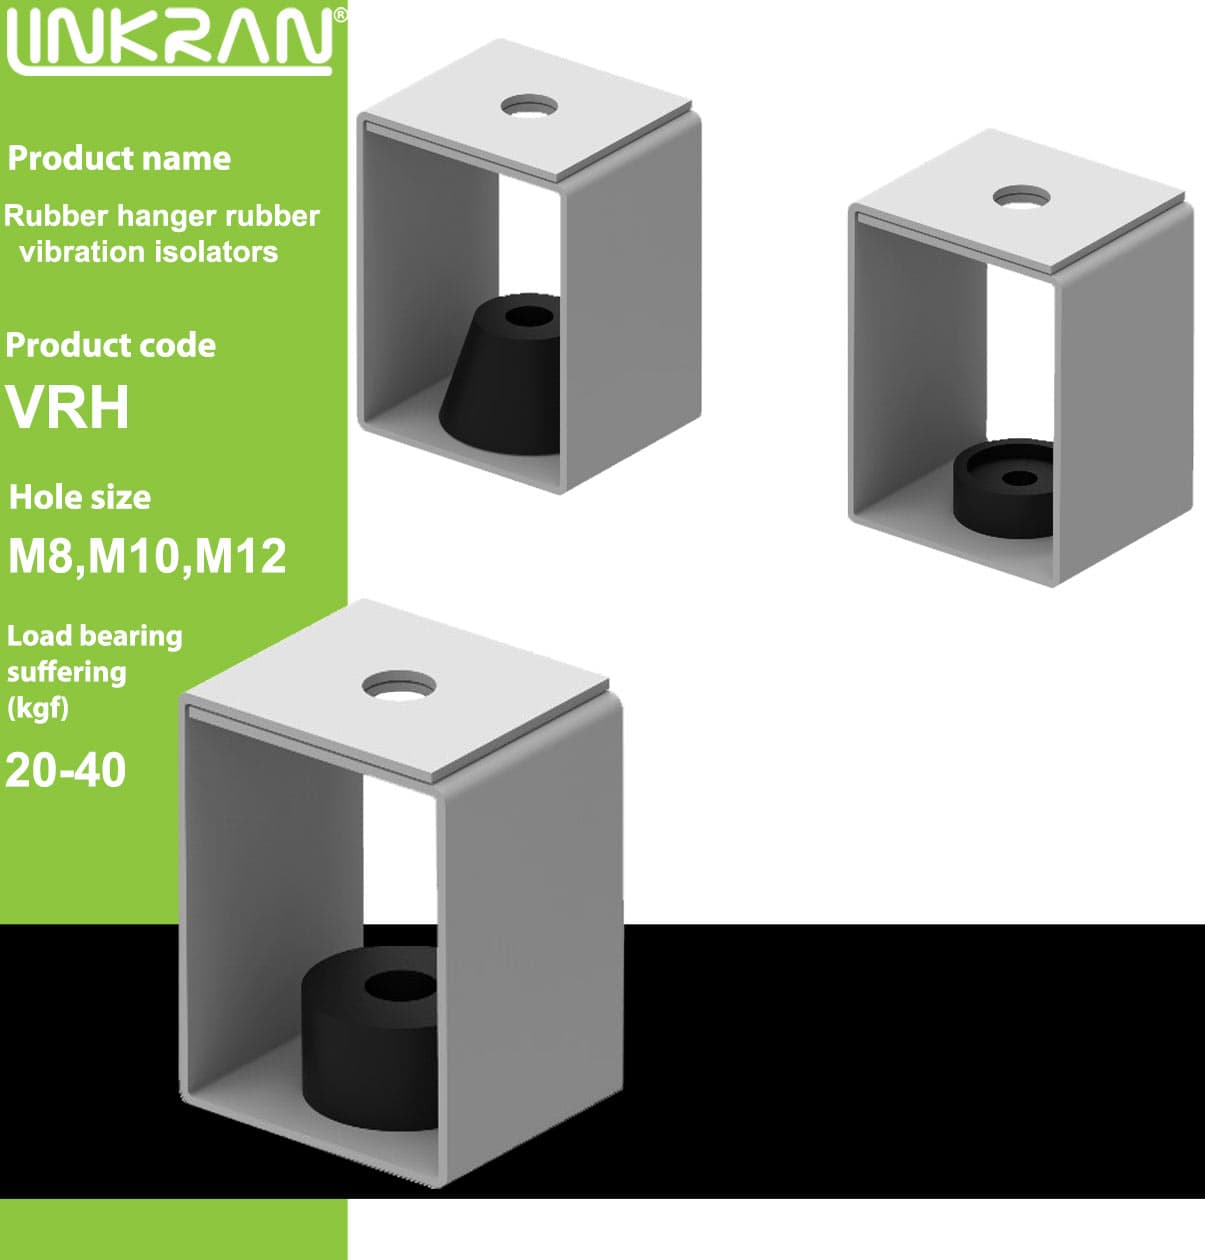 Rubber hanger rubber vibration isolators-Linkran Industrial Group